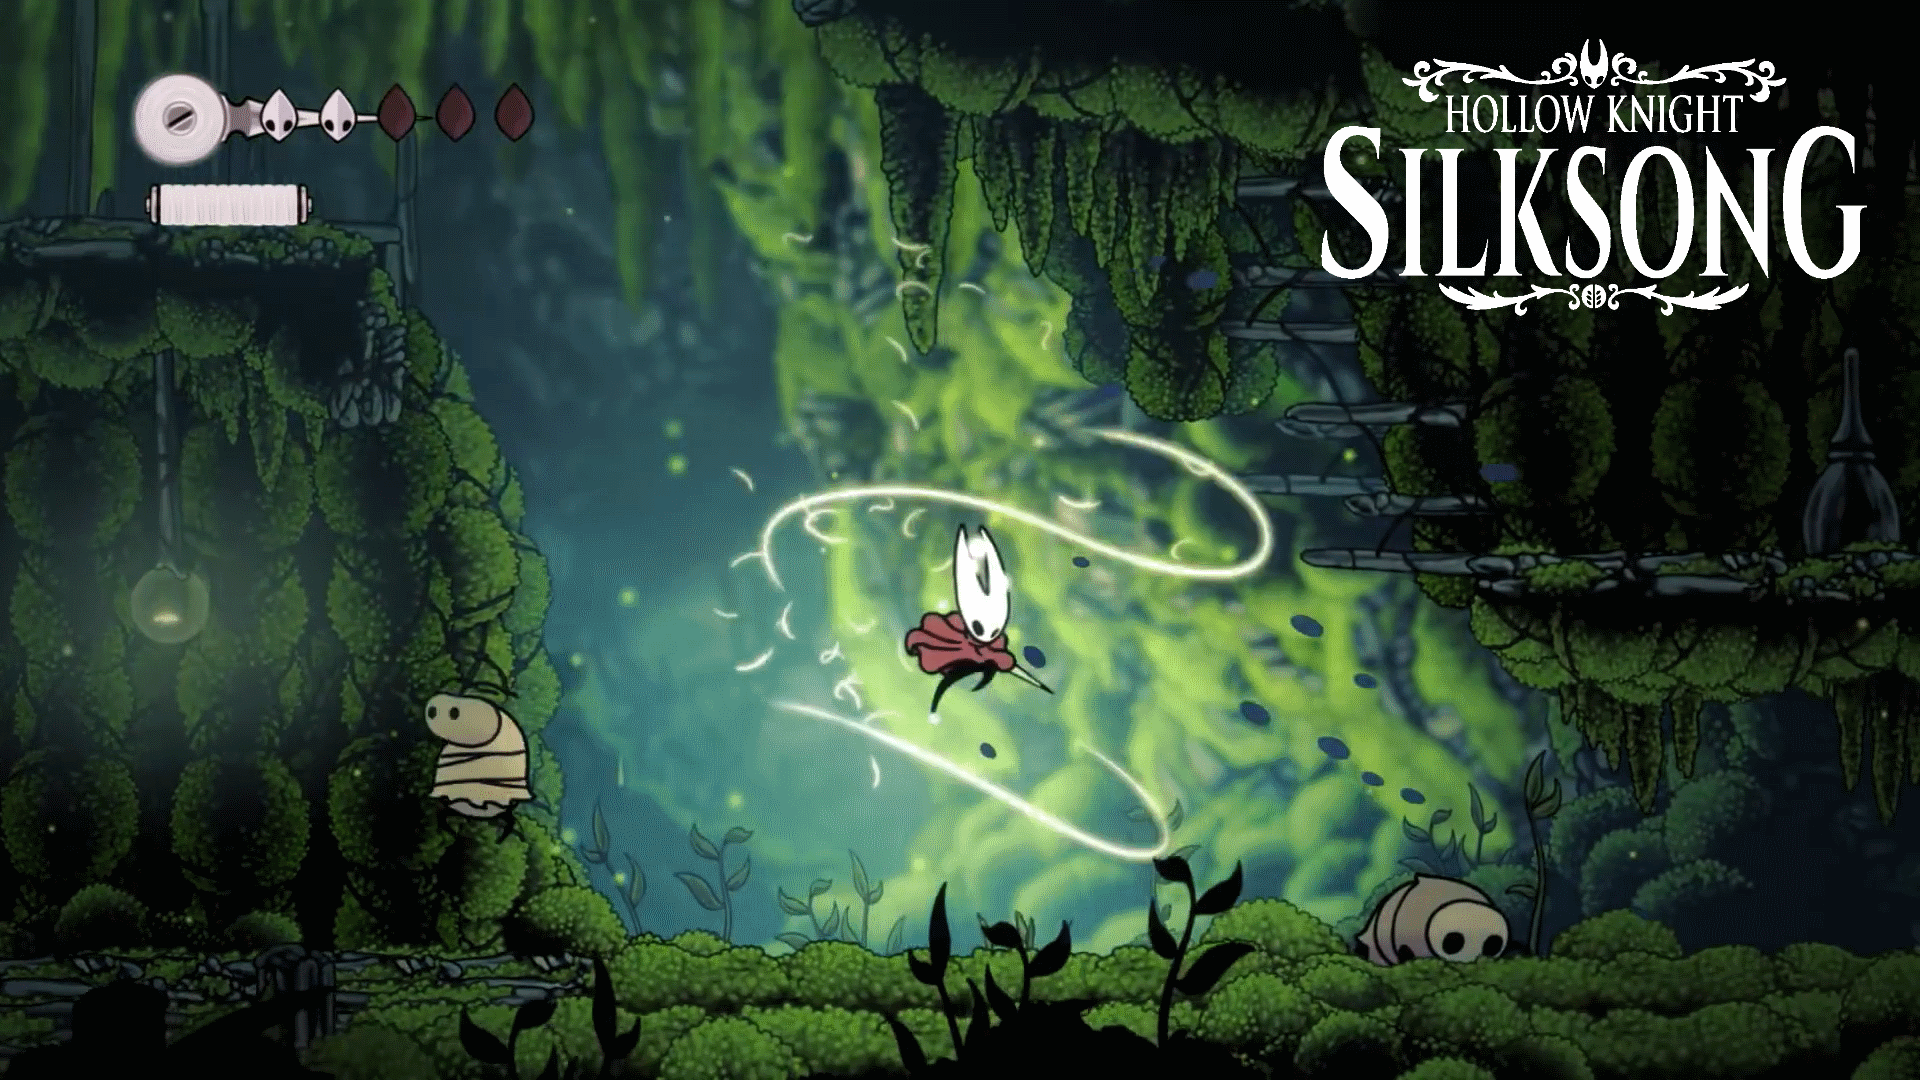 Hollow Knight: Silksong in Development